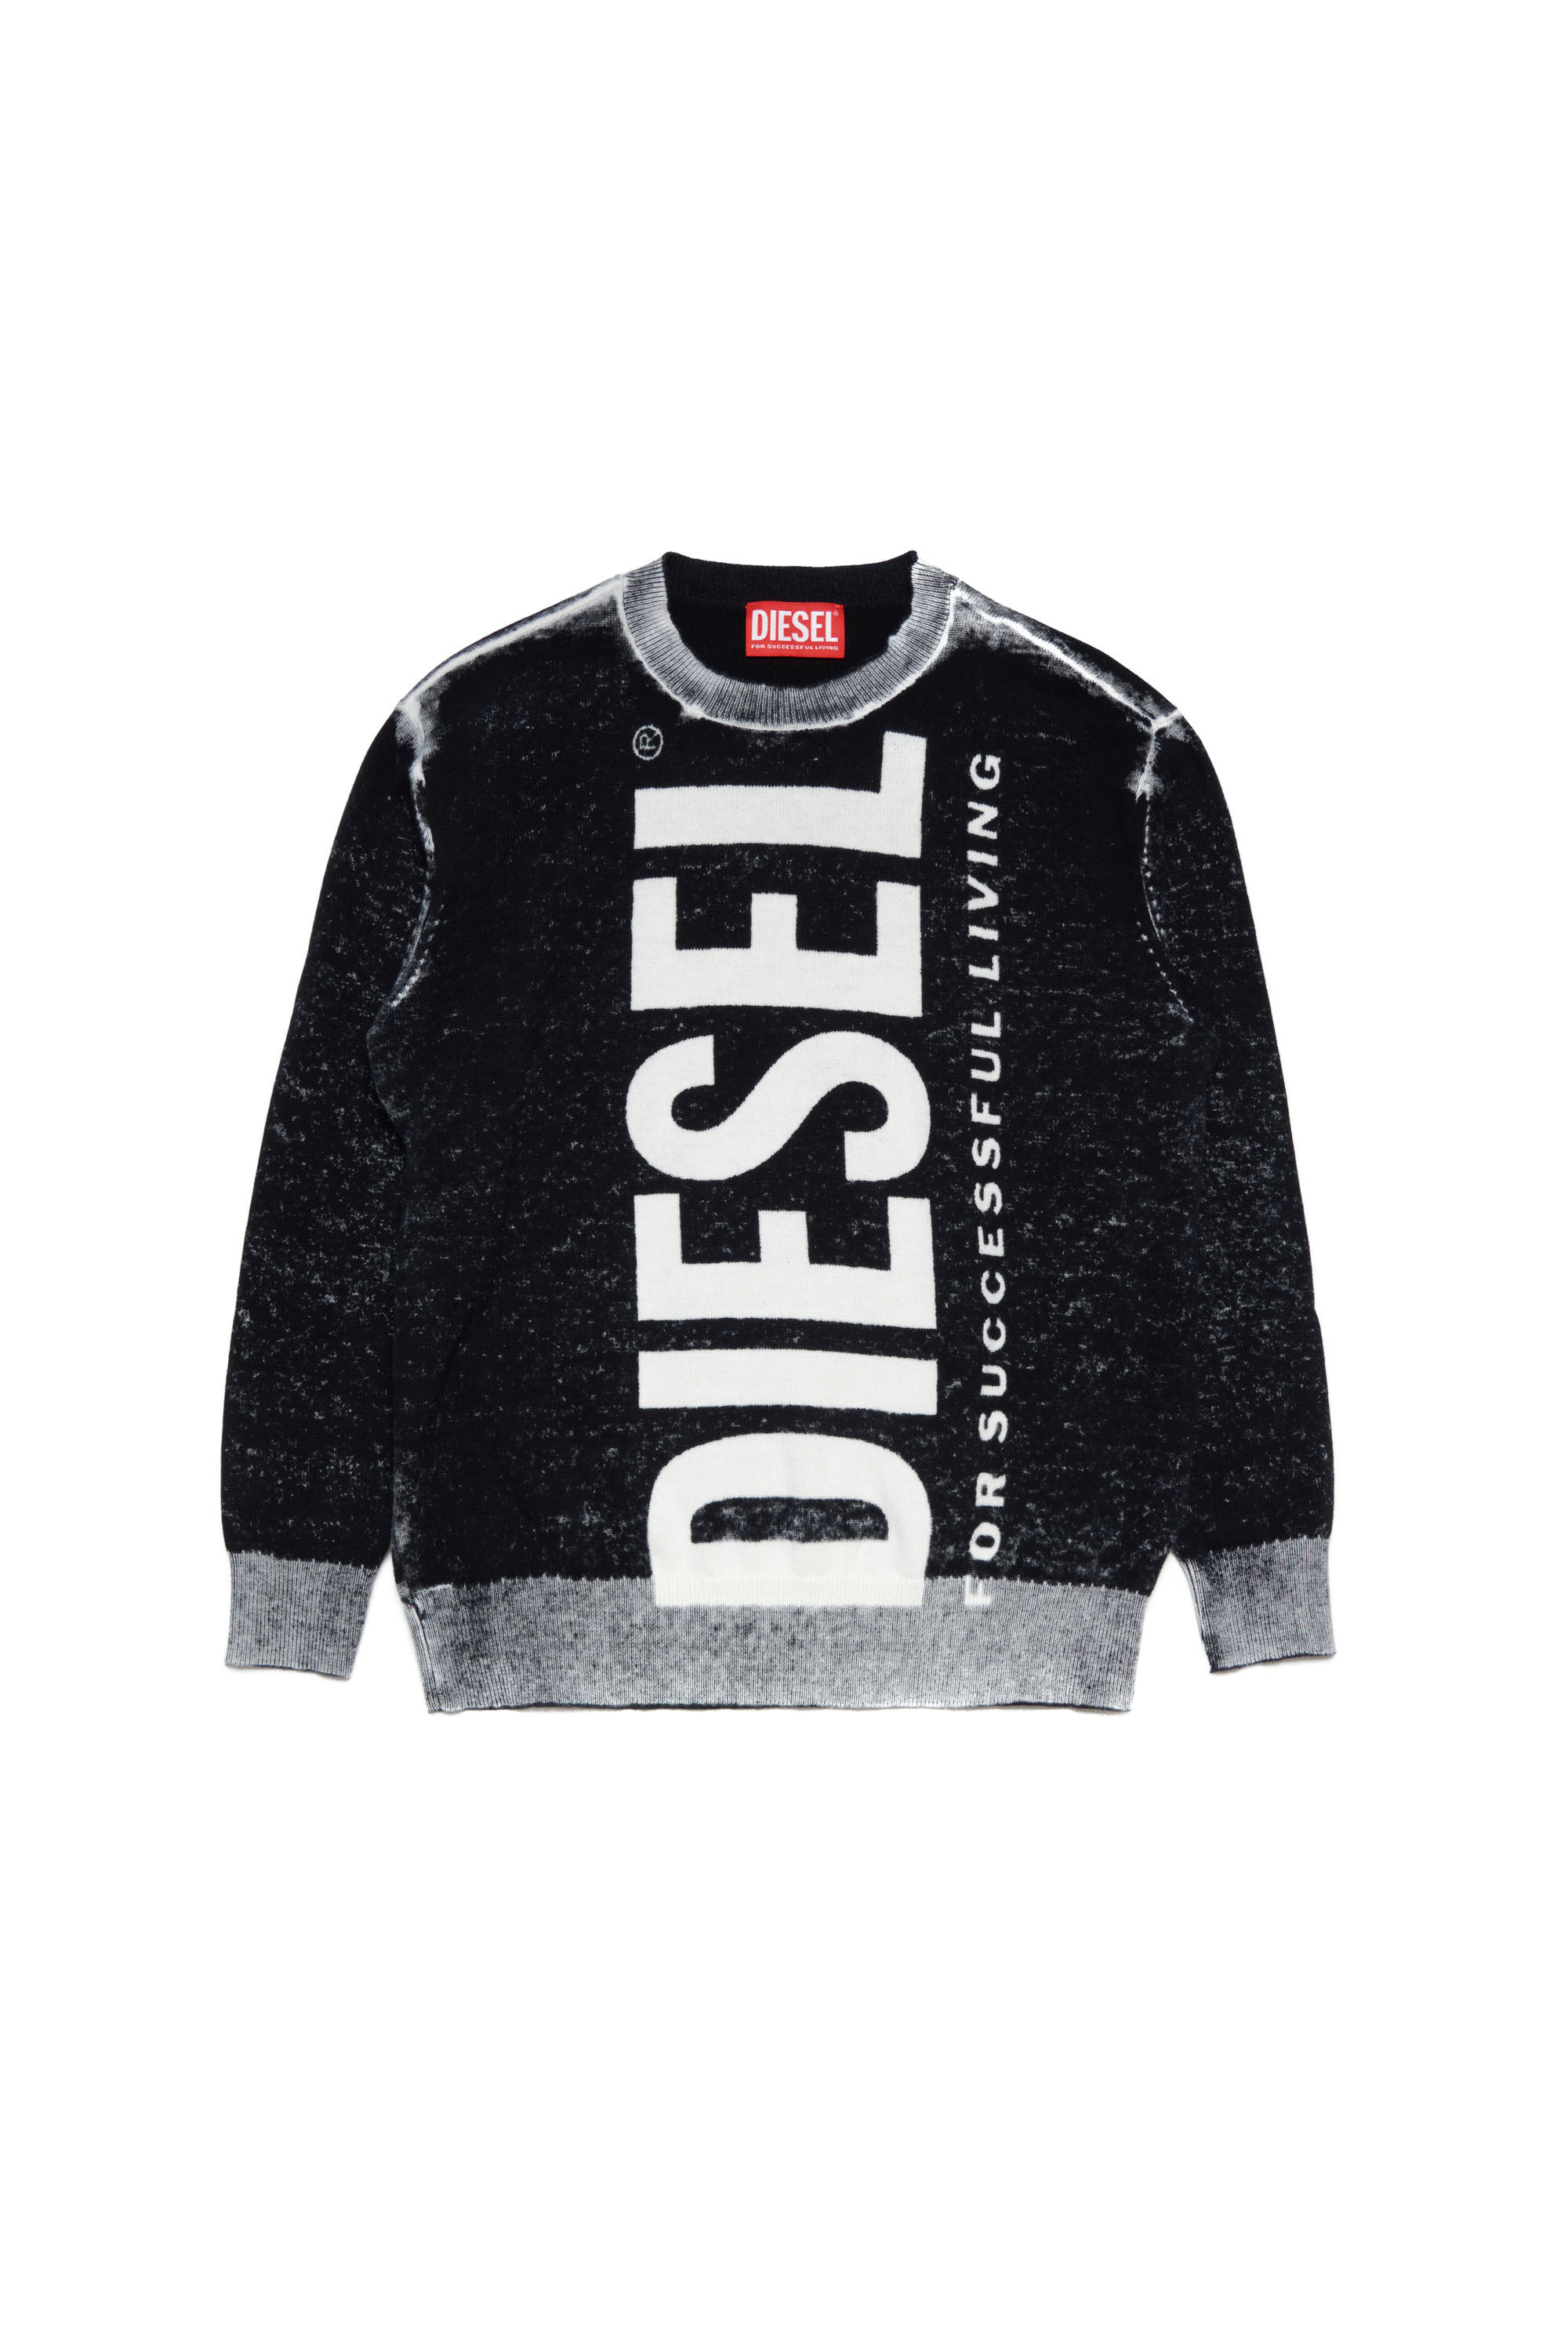 Diesel - KFLOW OVER, Uomo Pullover in maglia con scritta Diesel in Nero - Image 1